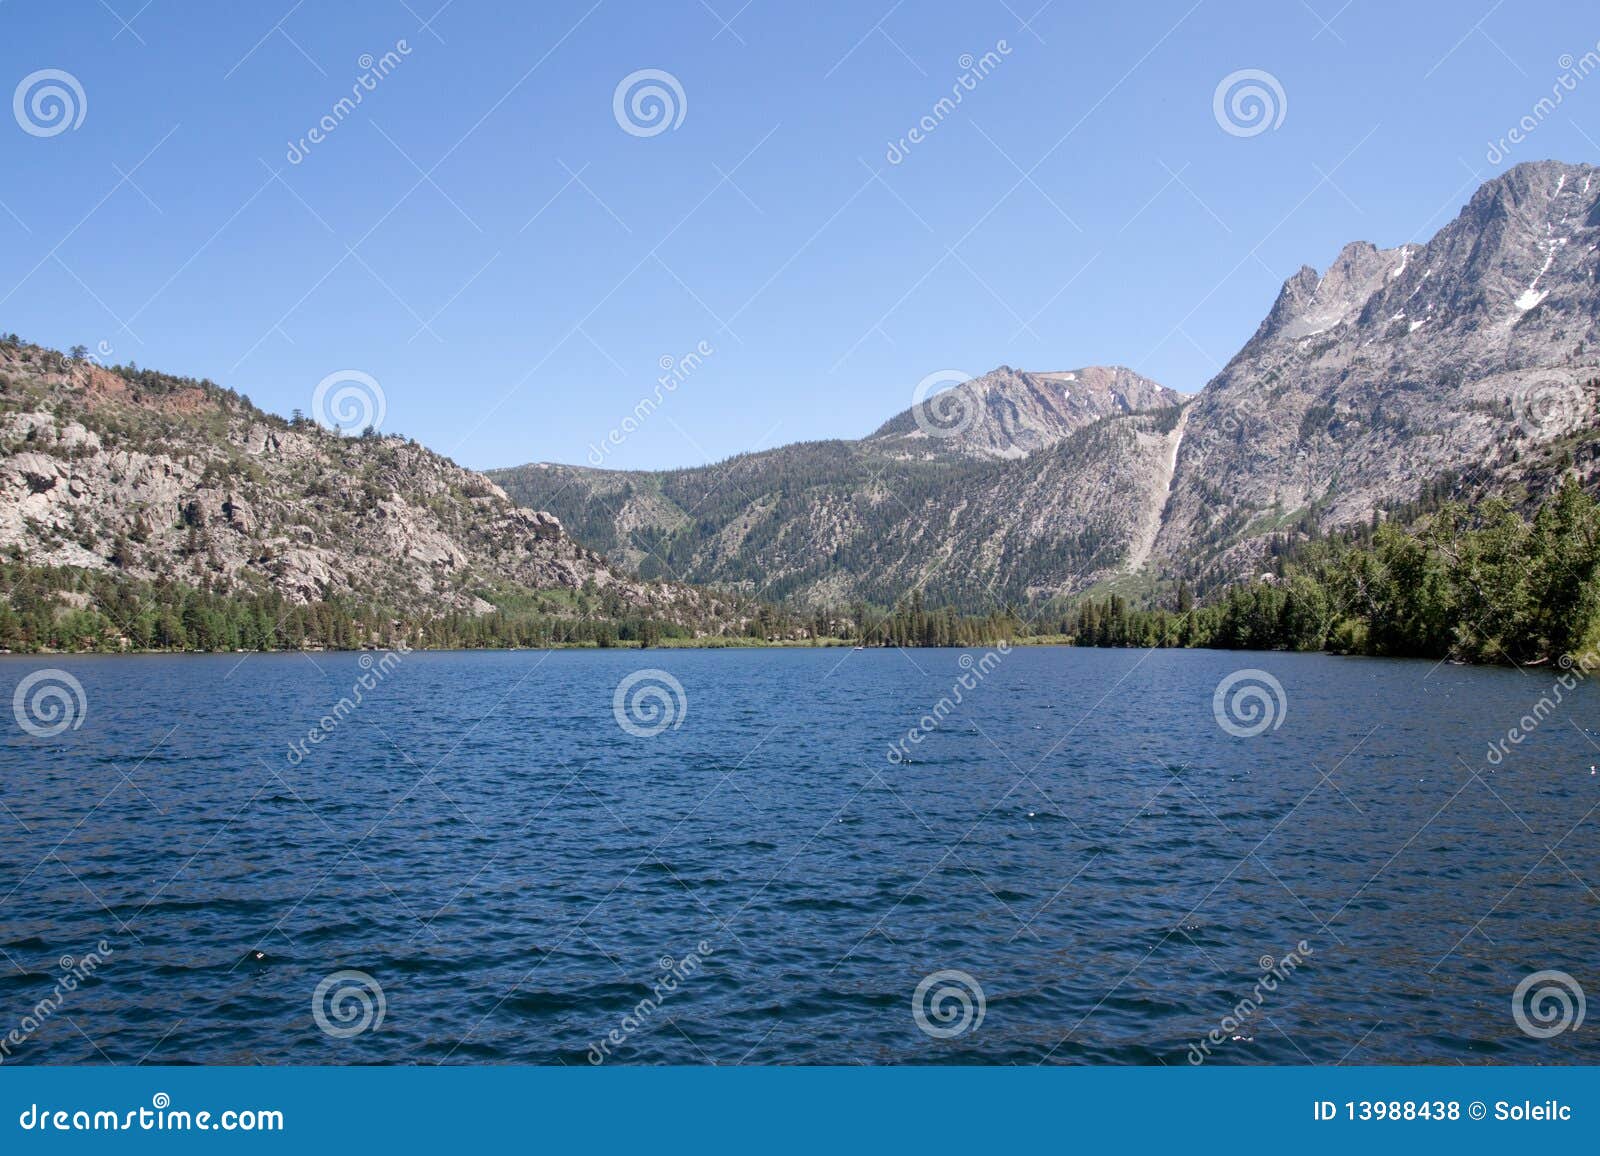 Scenic lake by Sierra Nevada mountain range.